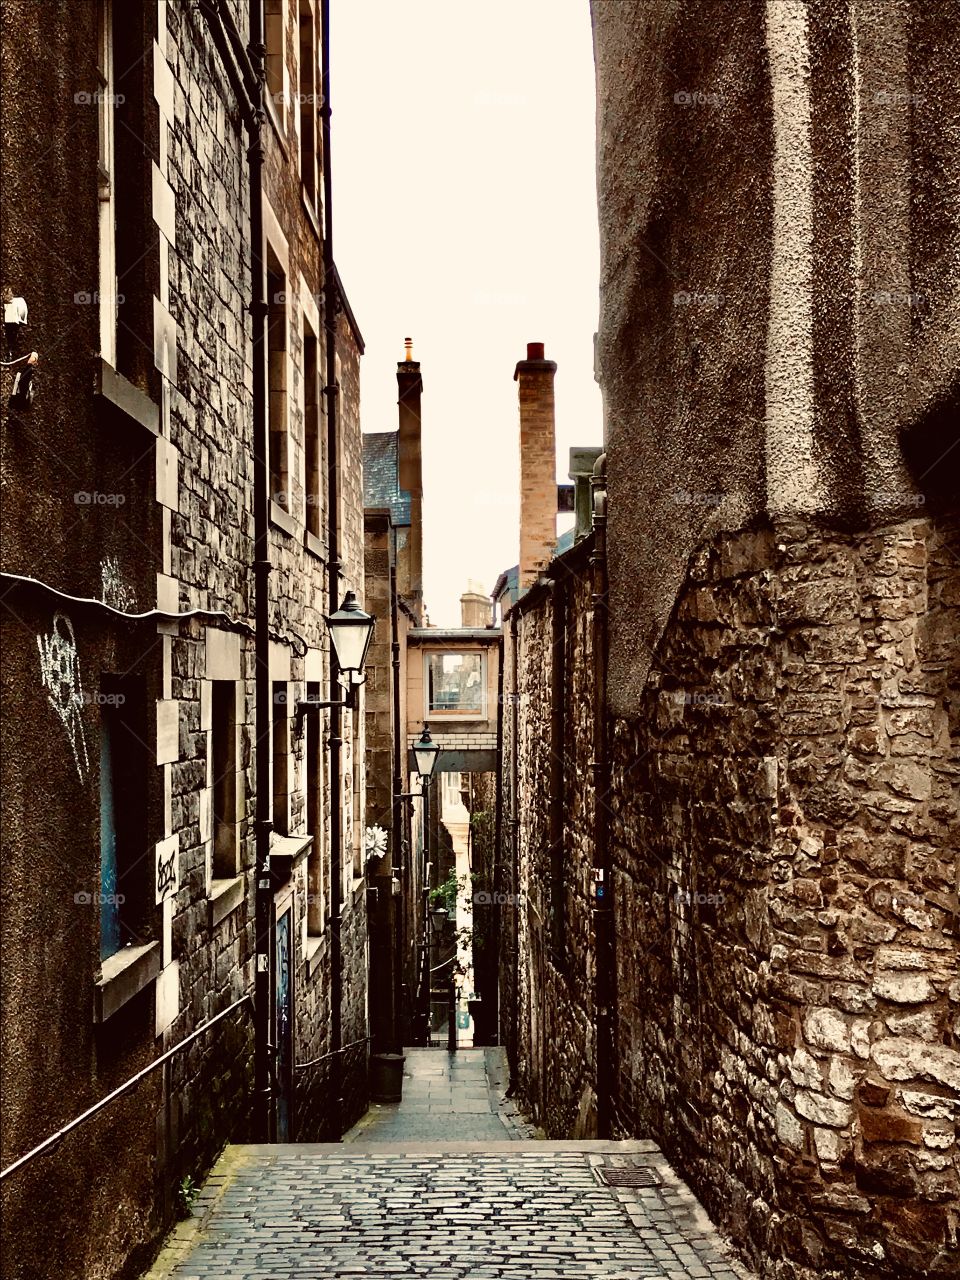 The long beutiful back streets of edinburgh